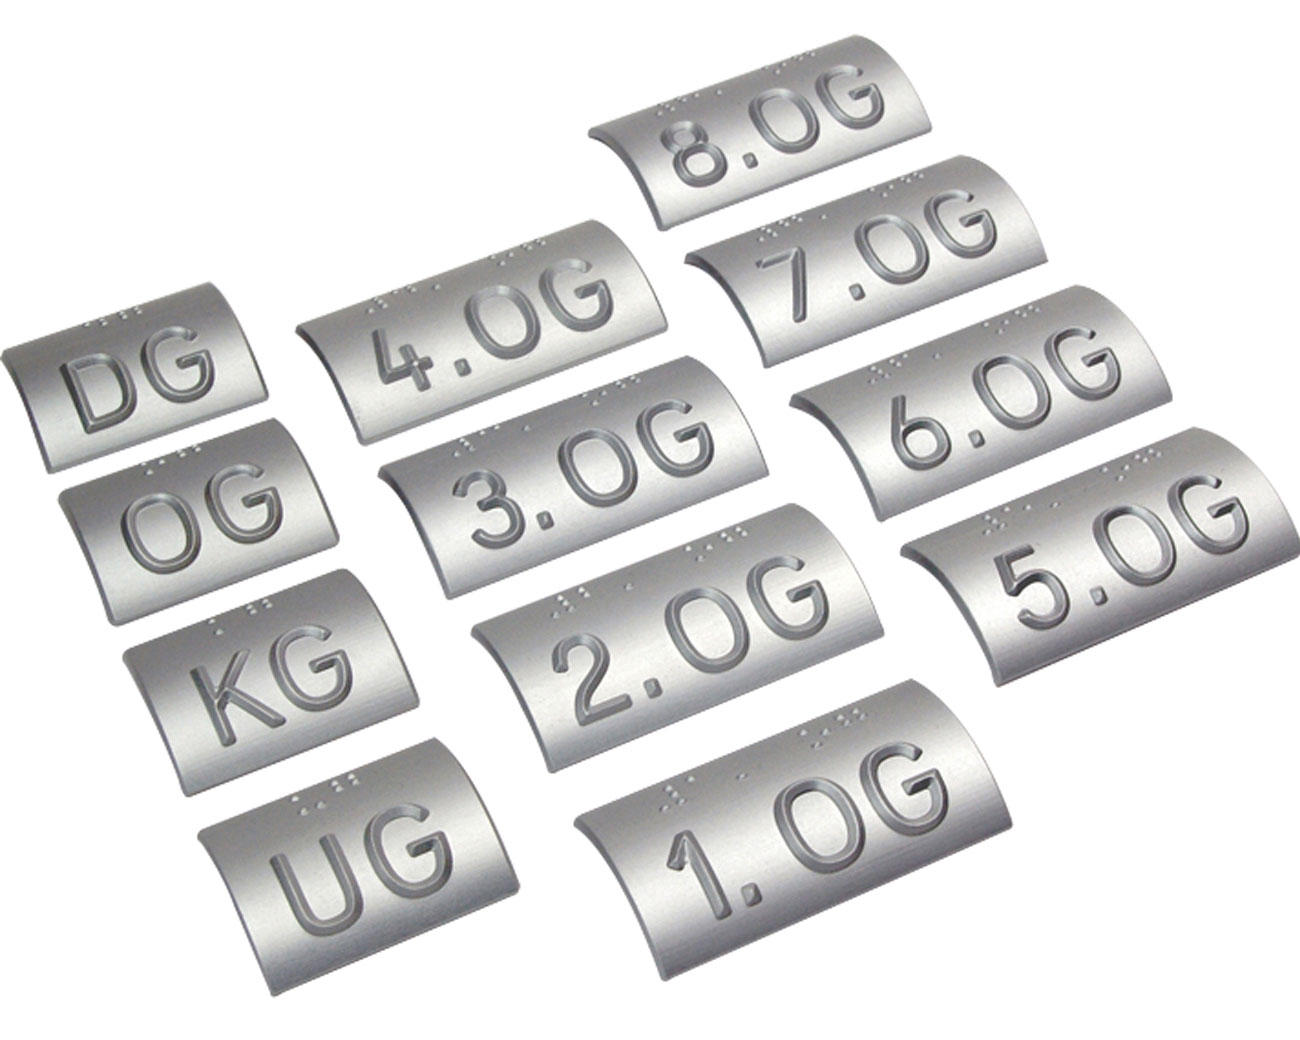 Handlaufschild rund Ø 40mm Aluminium silber eloxiert gefräst nach DIN32986